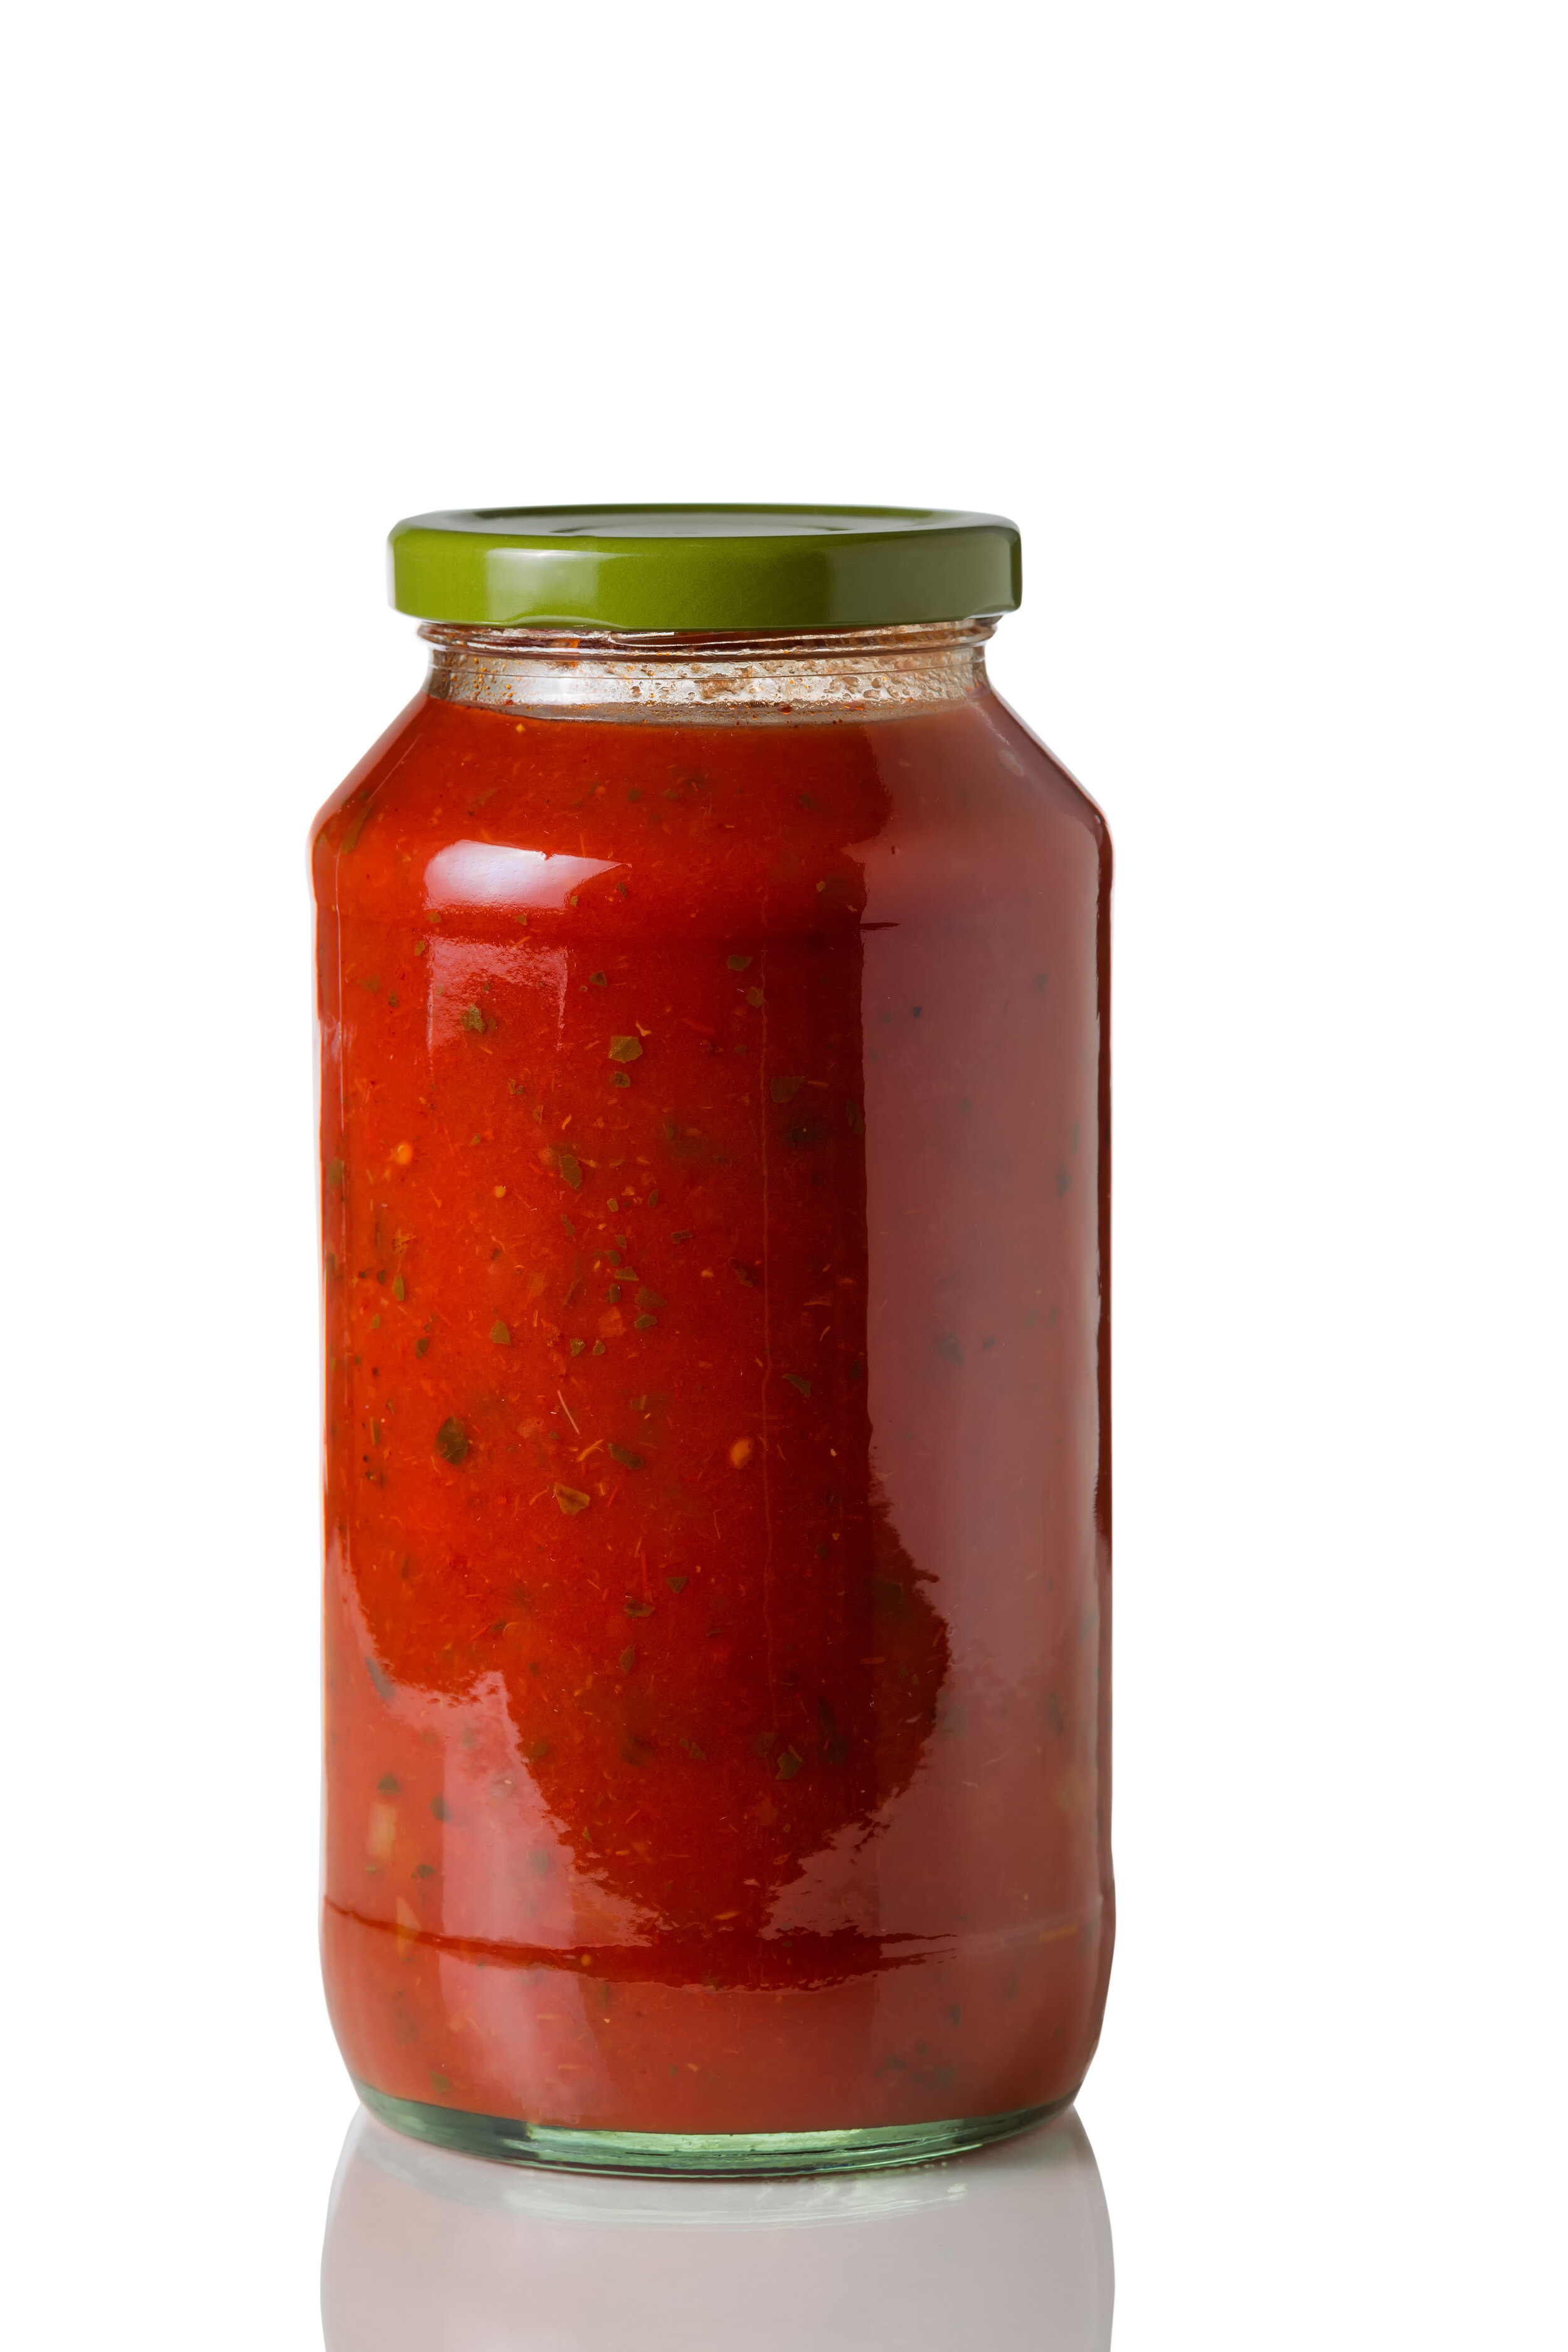 Tomatoe Sauce.jpg